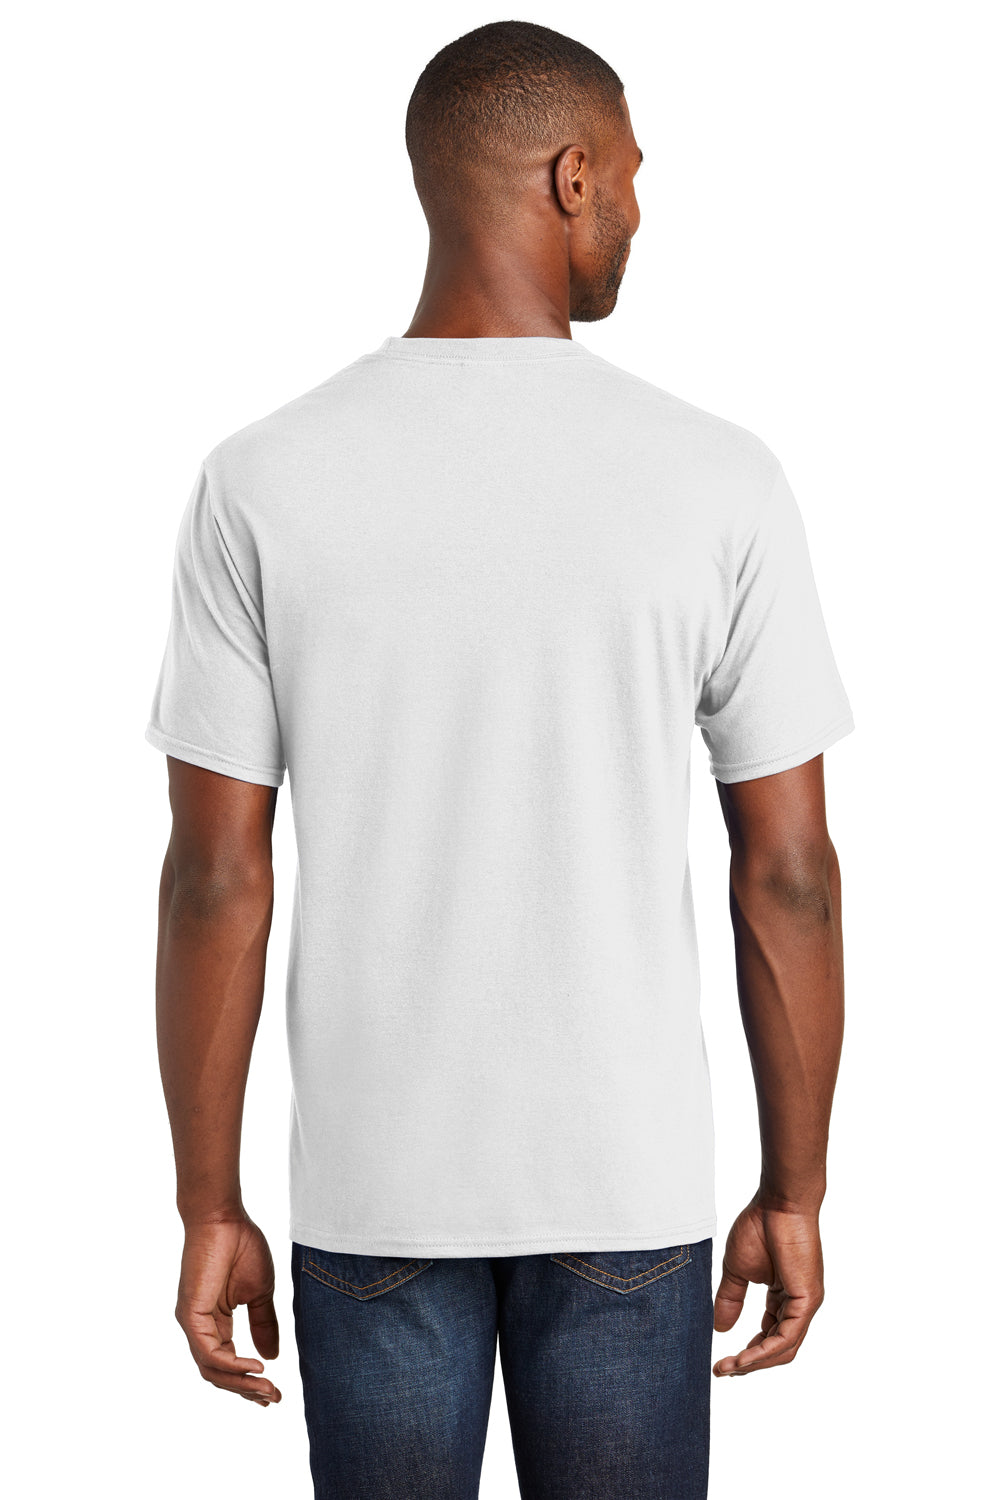 Port & Company PC450 Mens Fan Favorite Short Sleeve Crewneck T-Shirt White Back